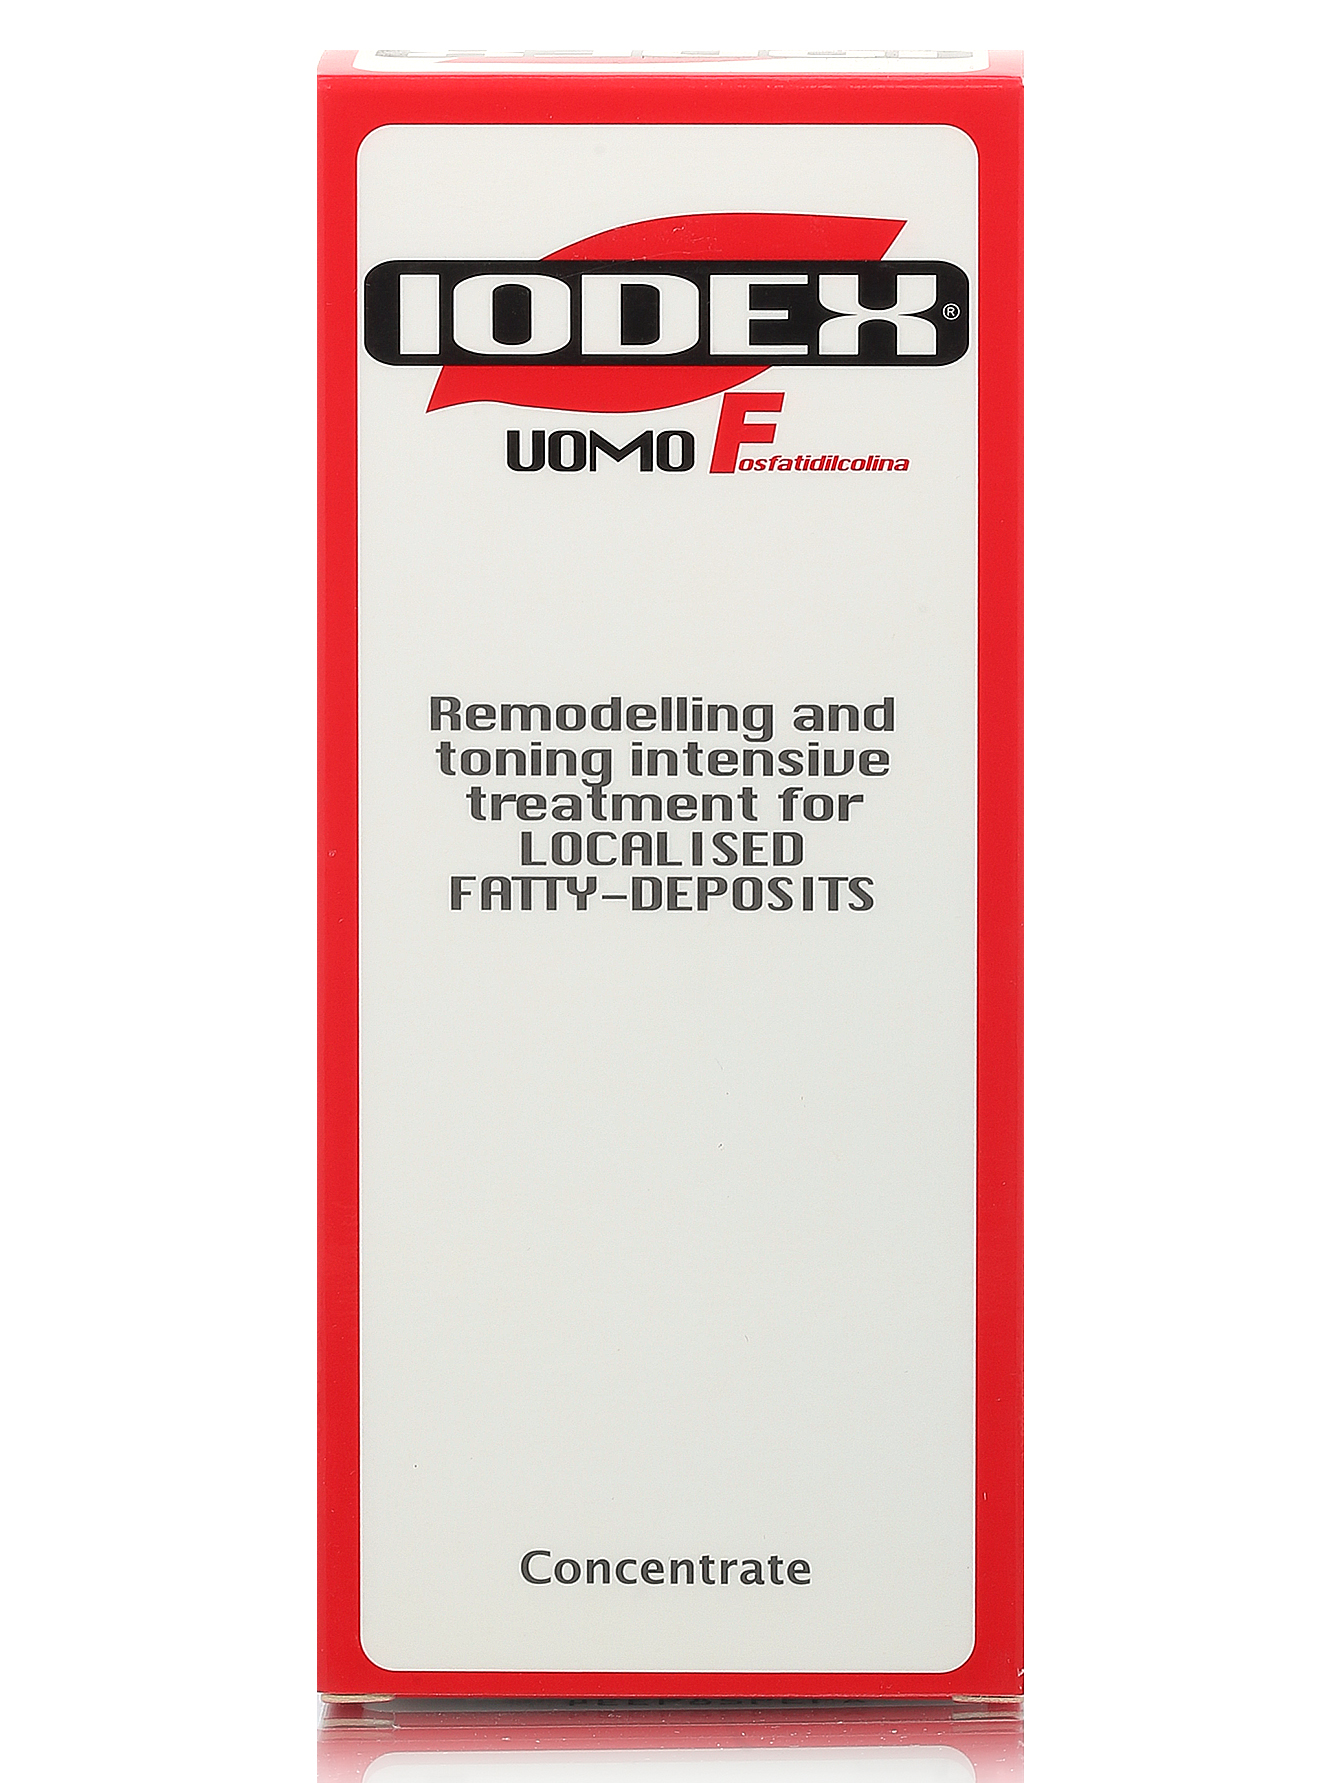  Сыворотка "Iodex Uomo  F-Fosfatidilcolina" - Body Care, 100ml - Модель Верх-Низ